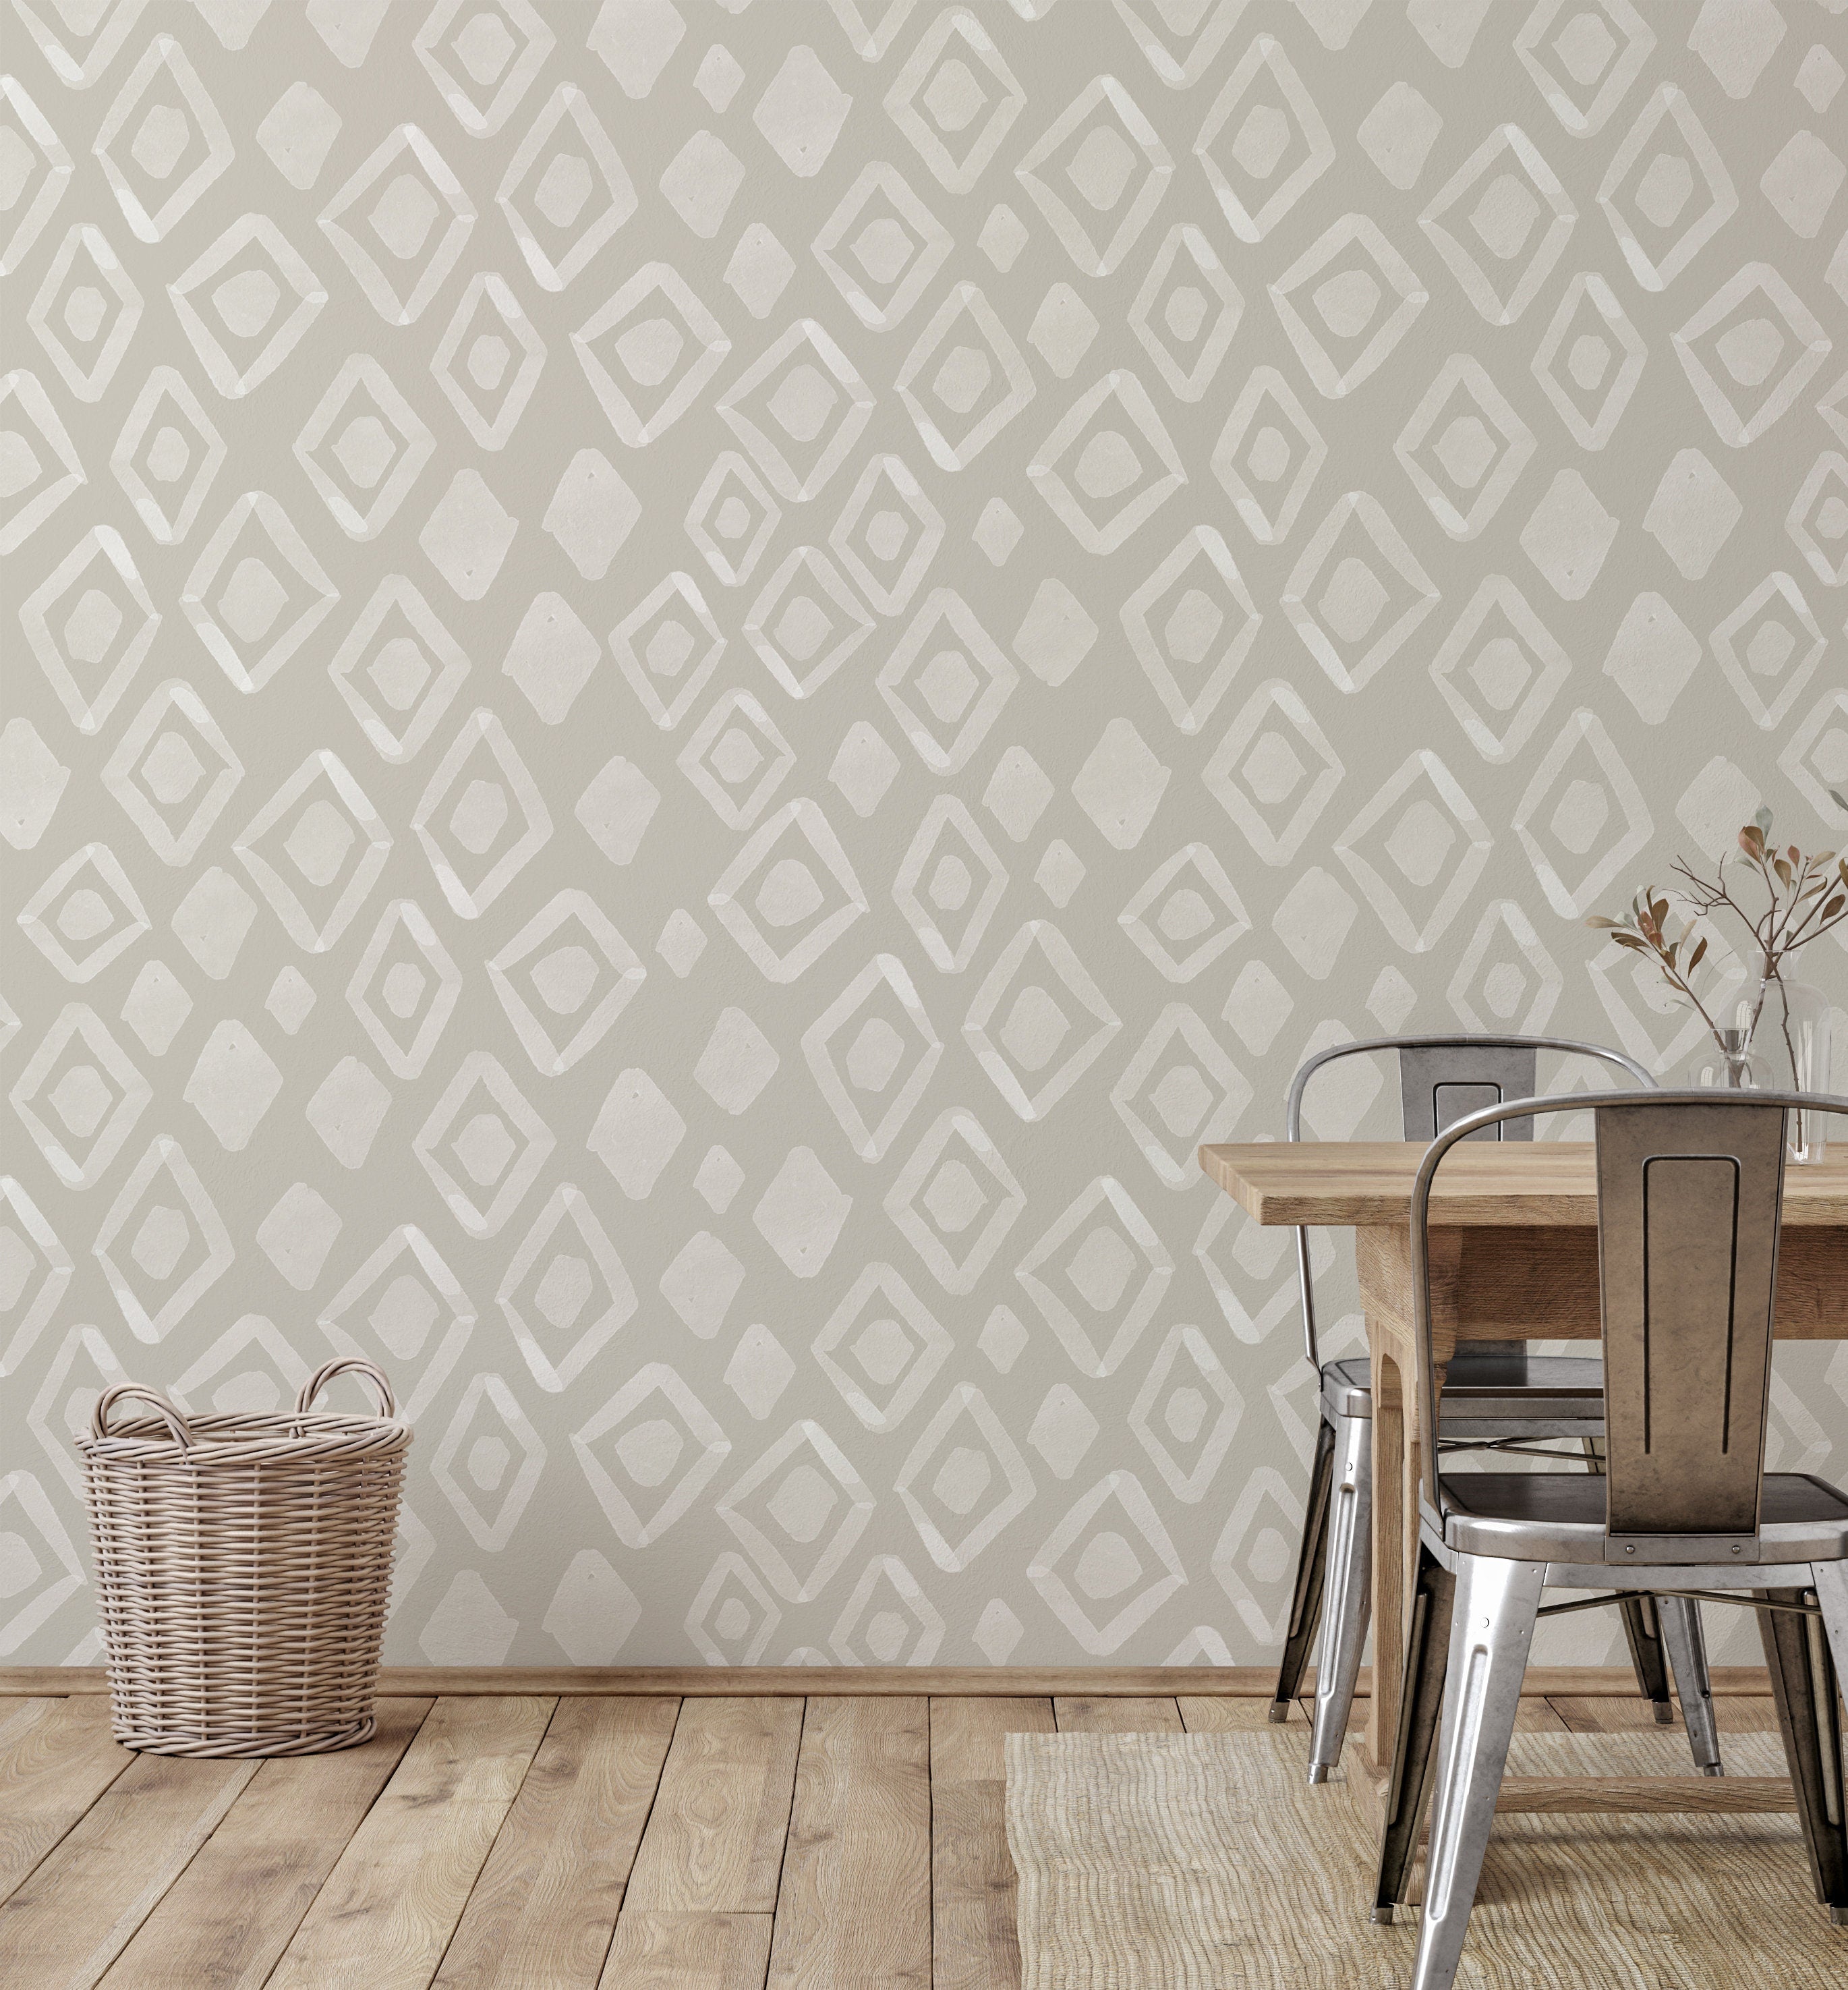 Tan Boho Geometric Wallpaper | Removable Wallpaper | Peel And Stick Wallpaper | Adhesive Wallpaper | Wall Paper Peel Stick Wall Mural 3611 - JamesAndColors